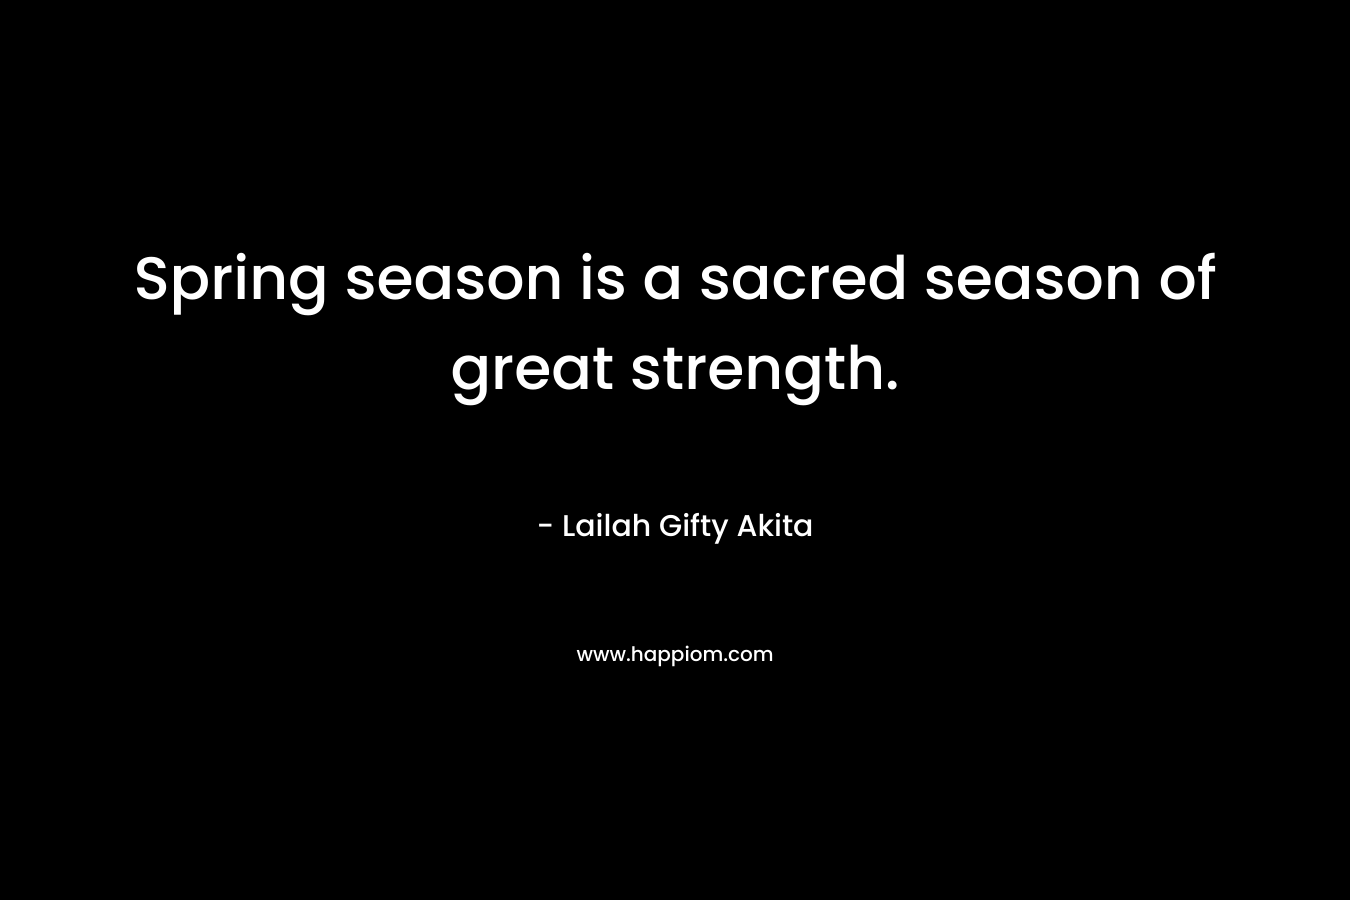 Spring season is a sacred season of great strength.